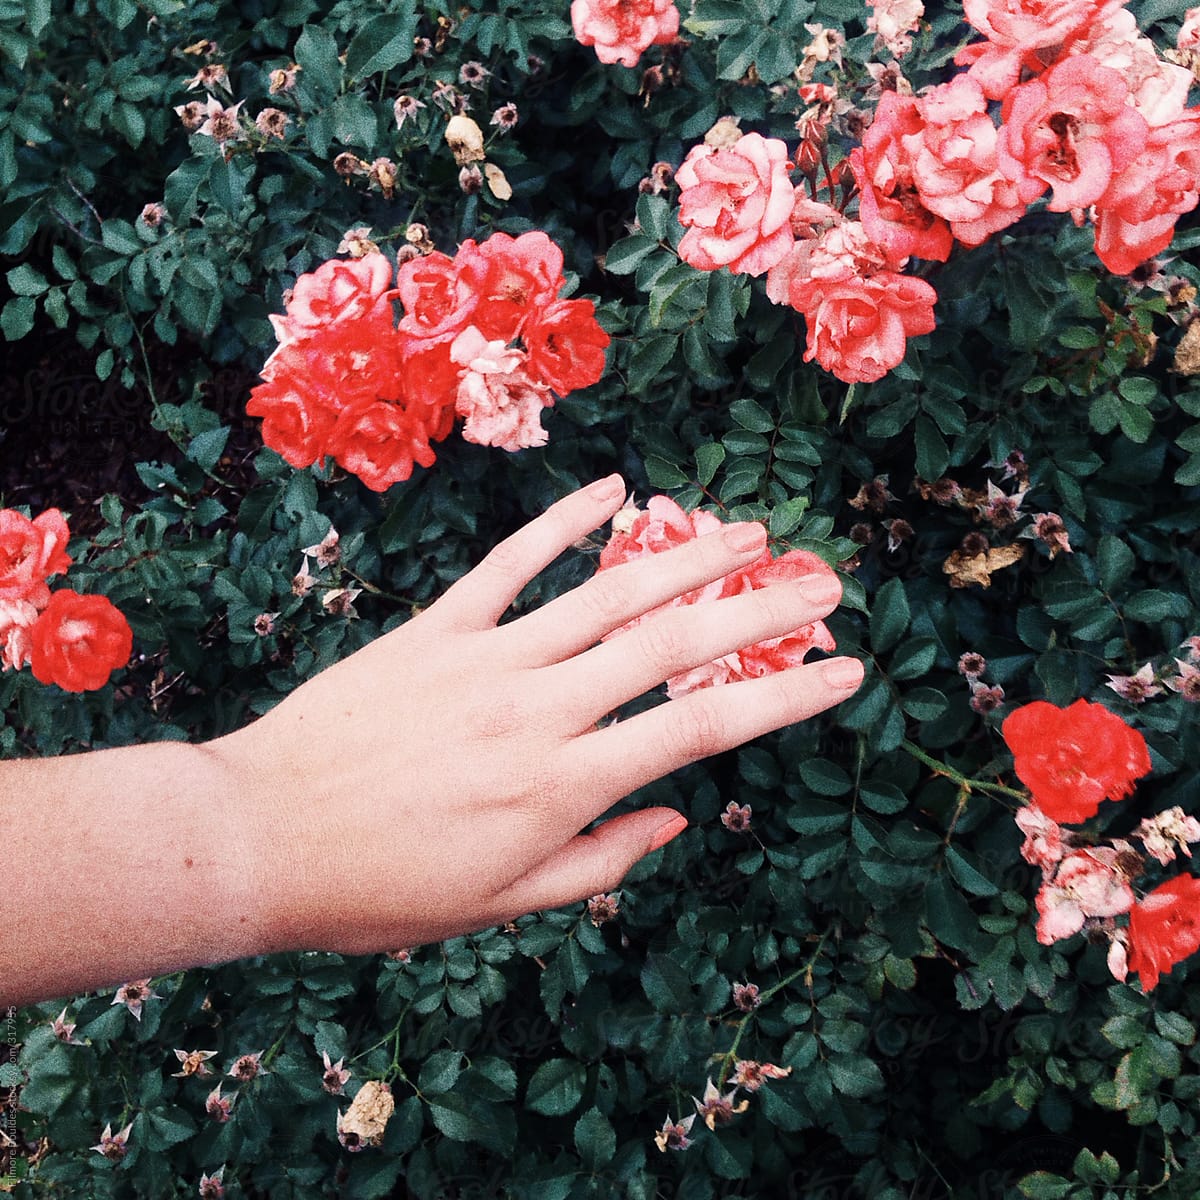 hand + flowers = beauty